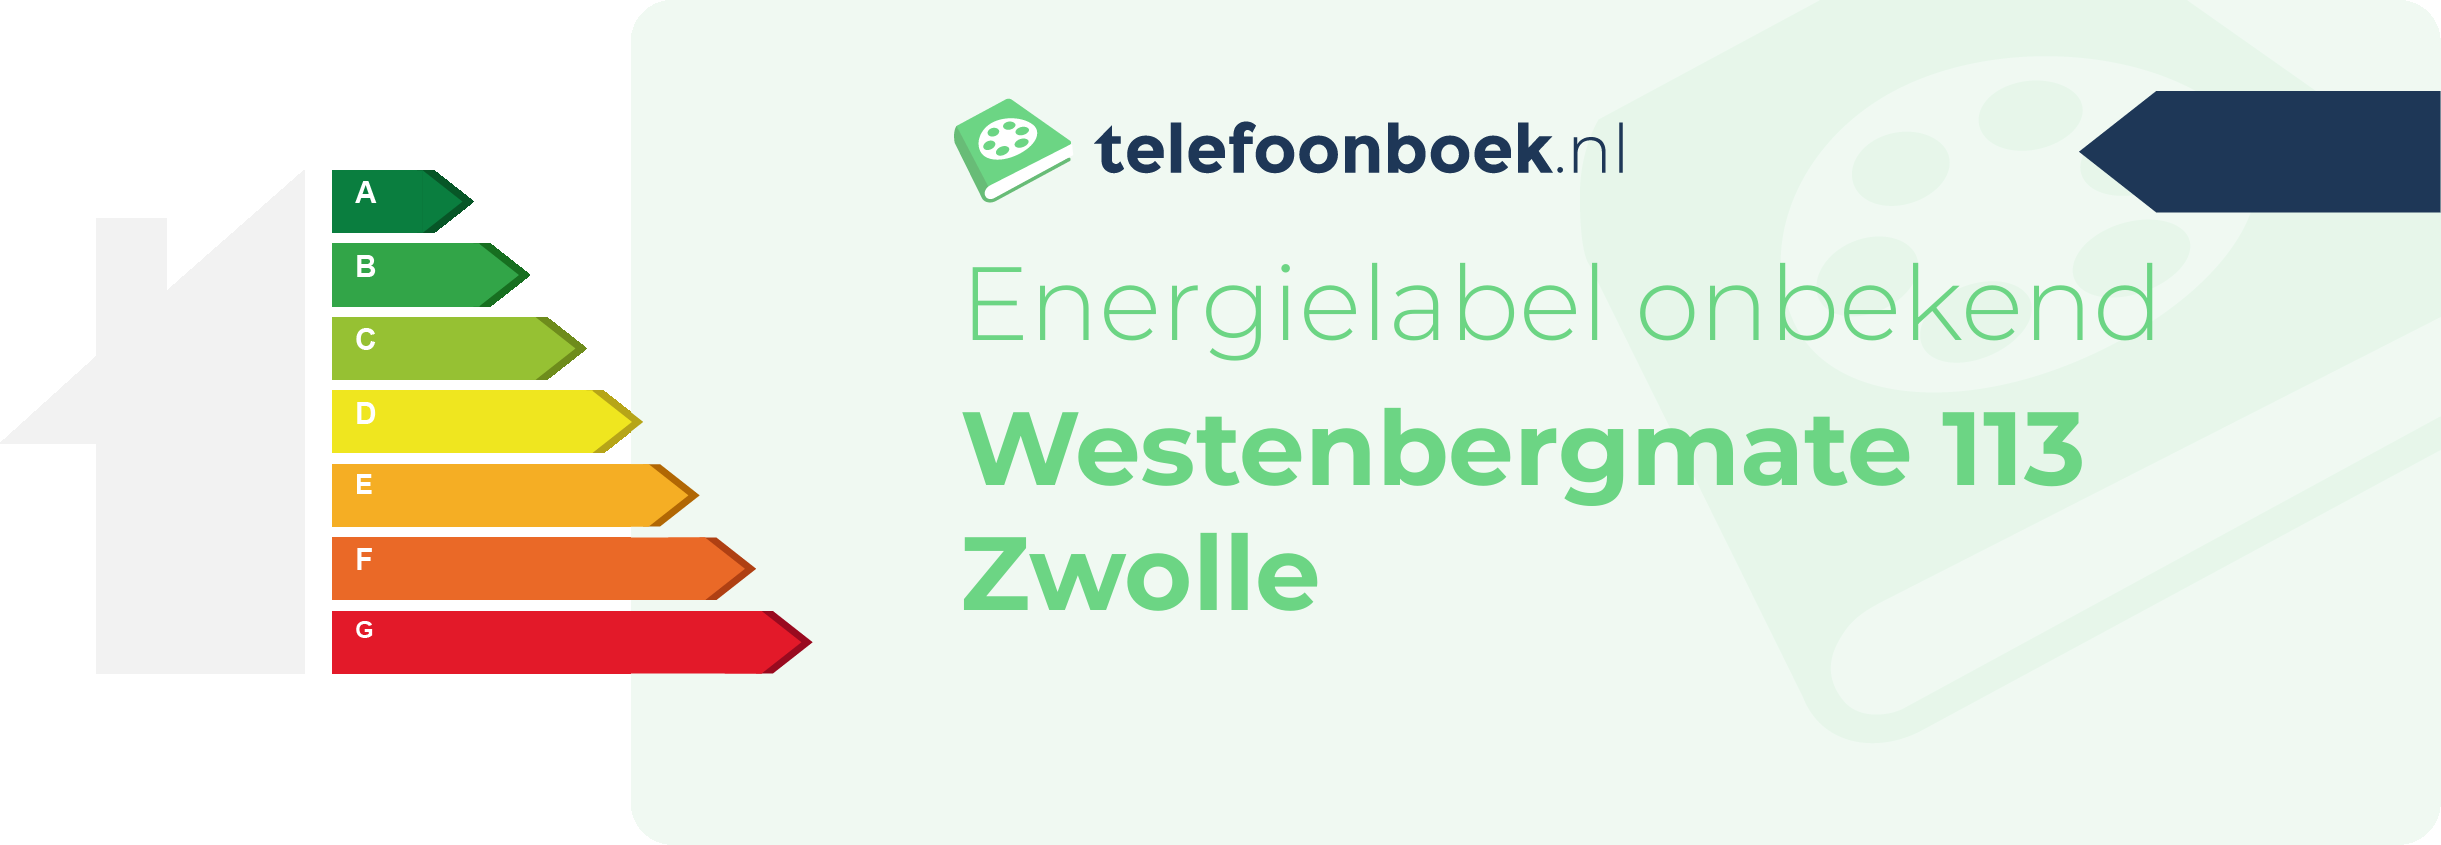 Energielabel Westenbergmate 113 Zwolle